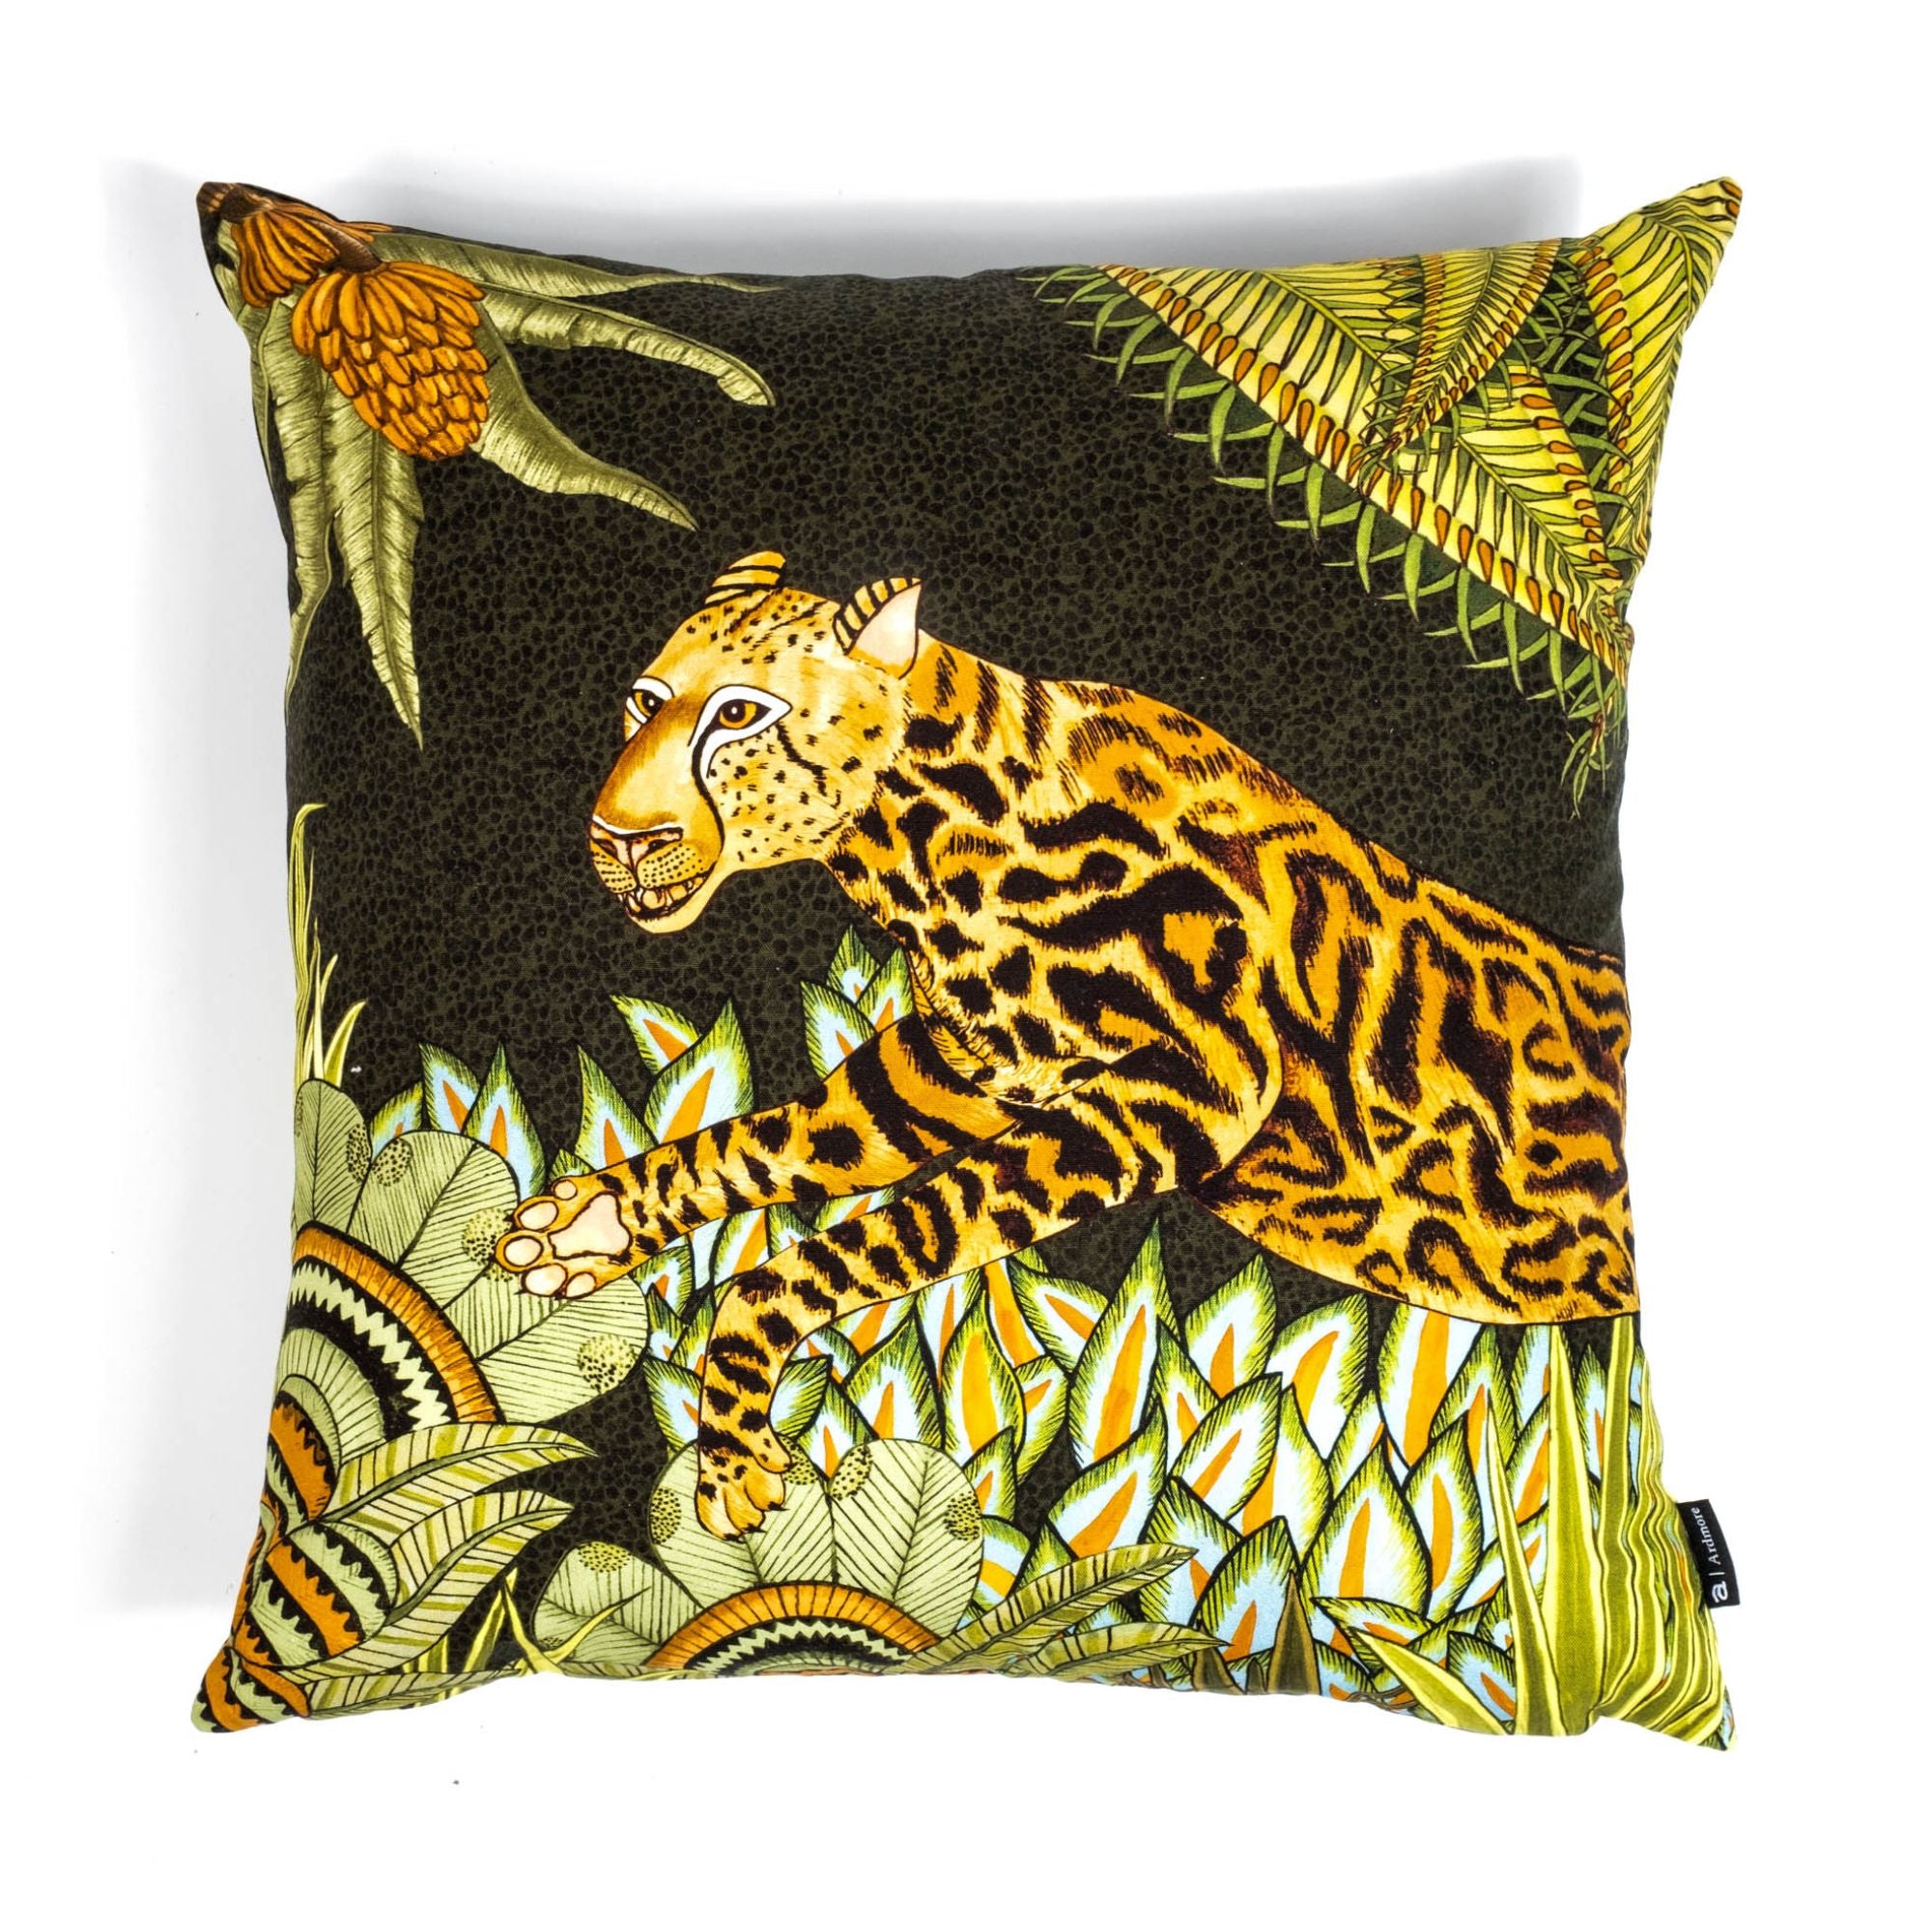 Cheetah Kings Forest Pillow - Cotton - Delta